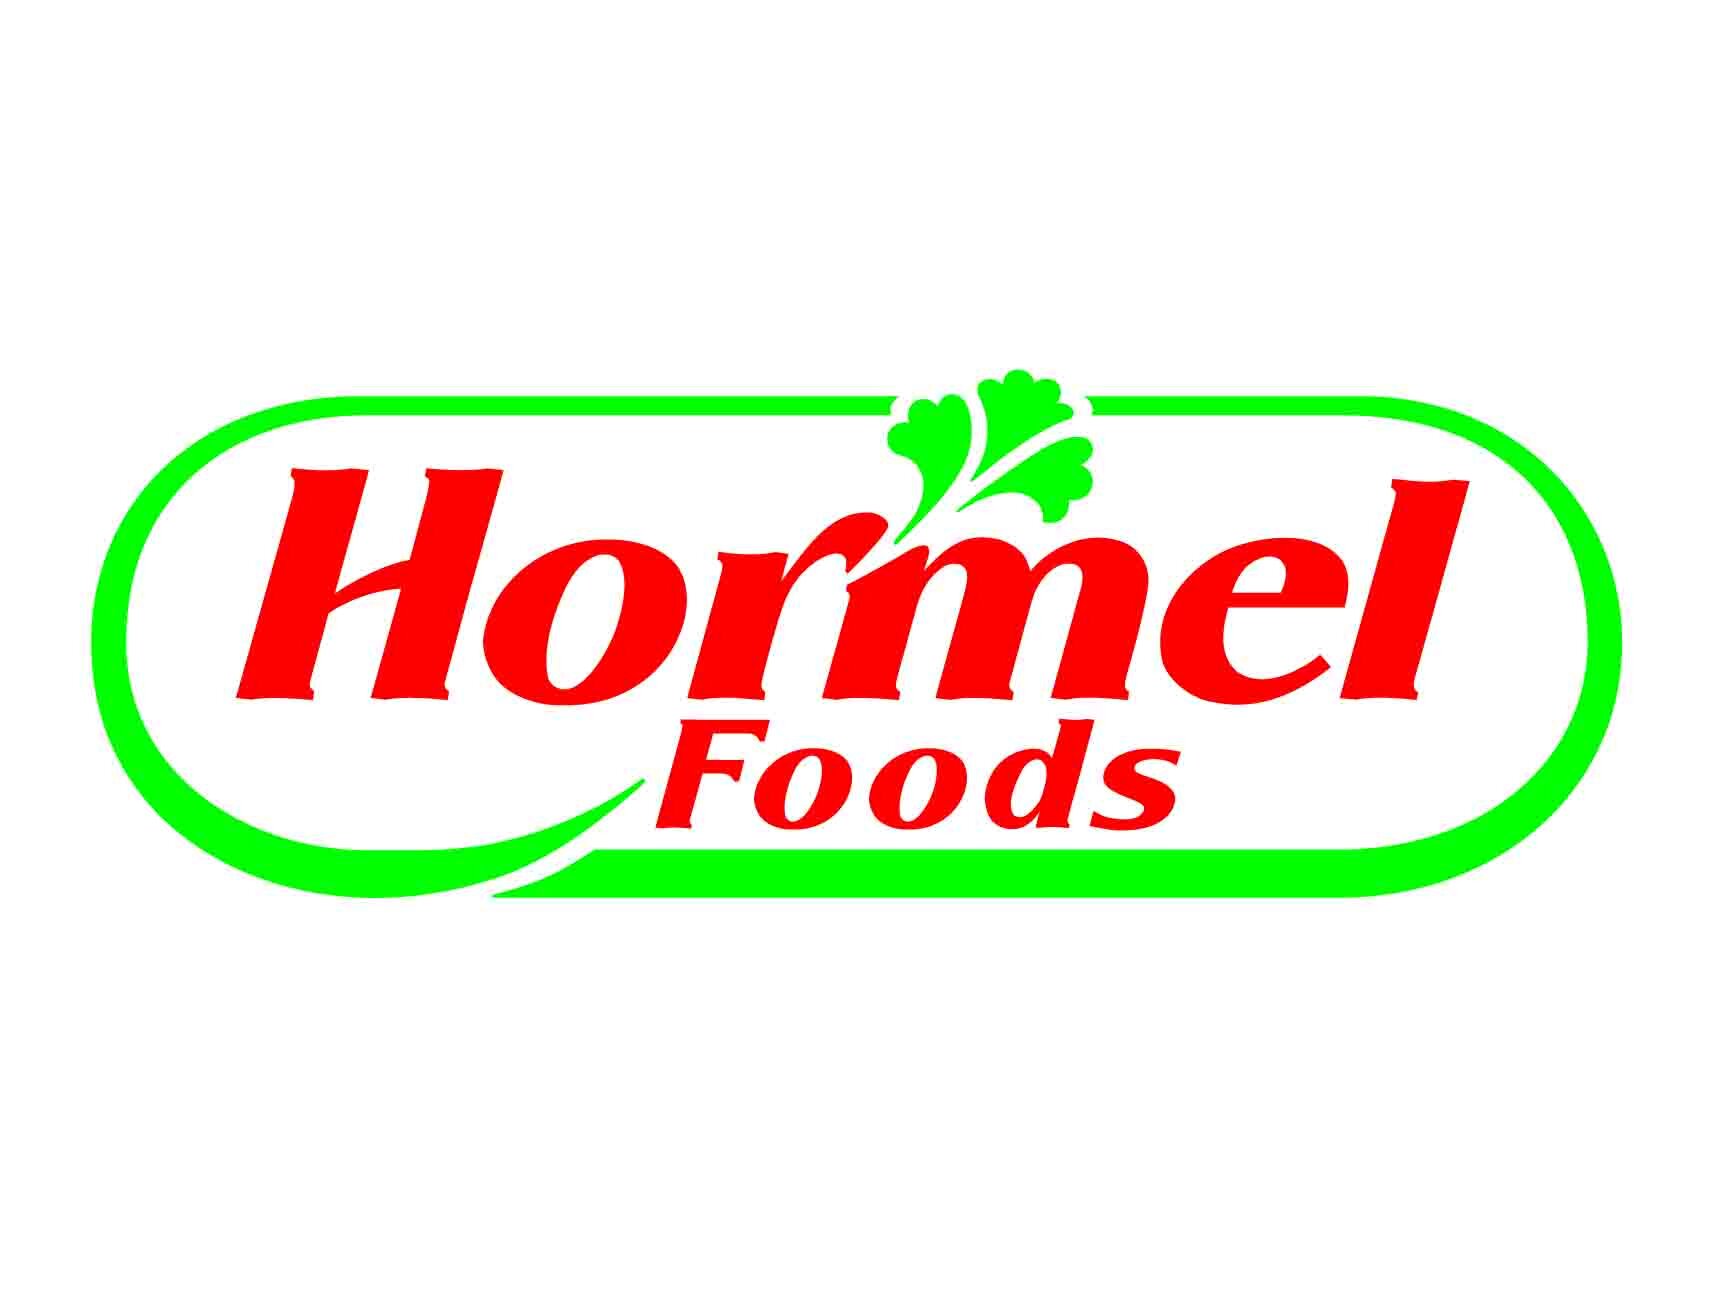 HORMEL FOODS.jpg